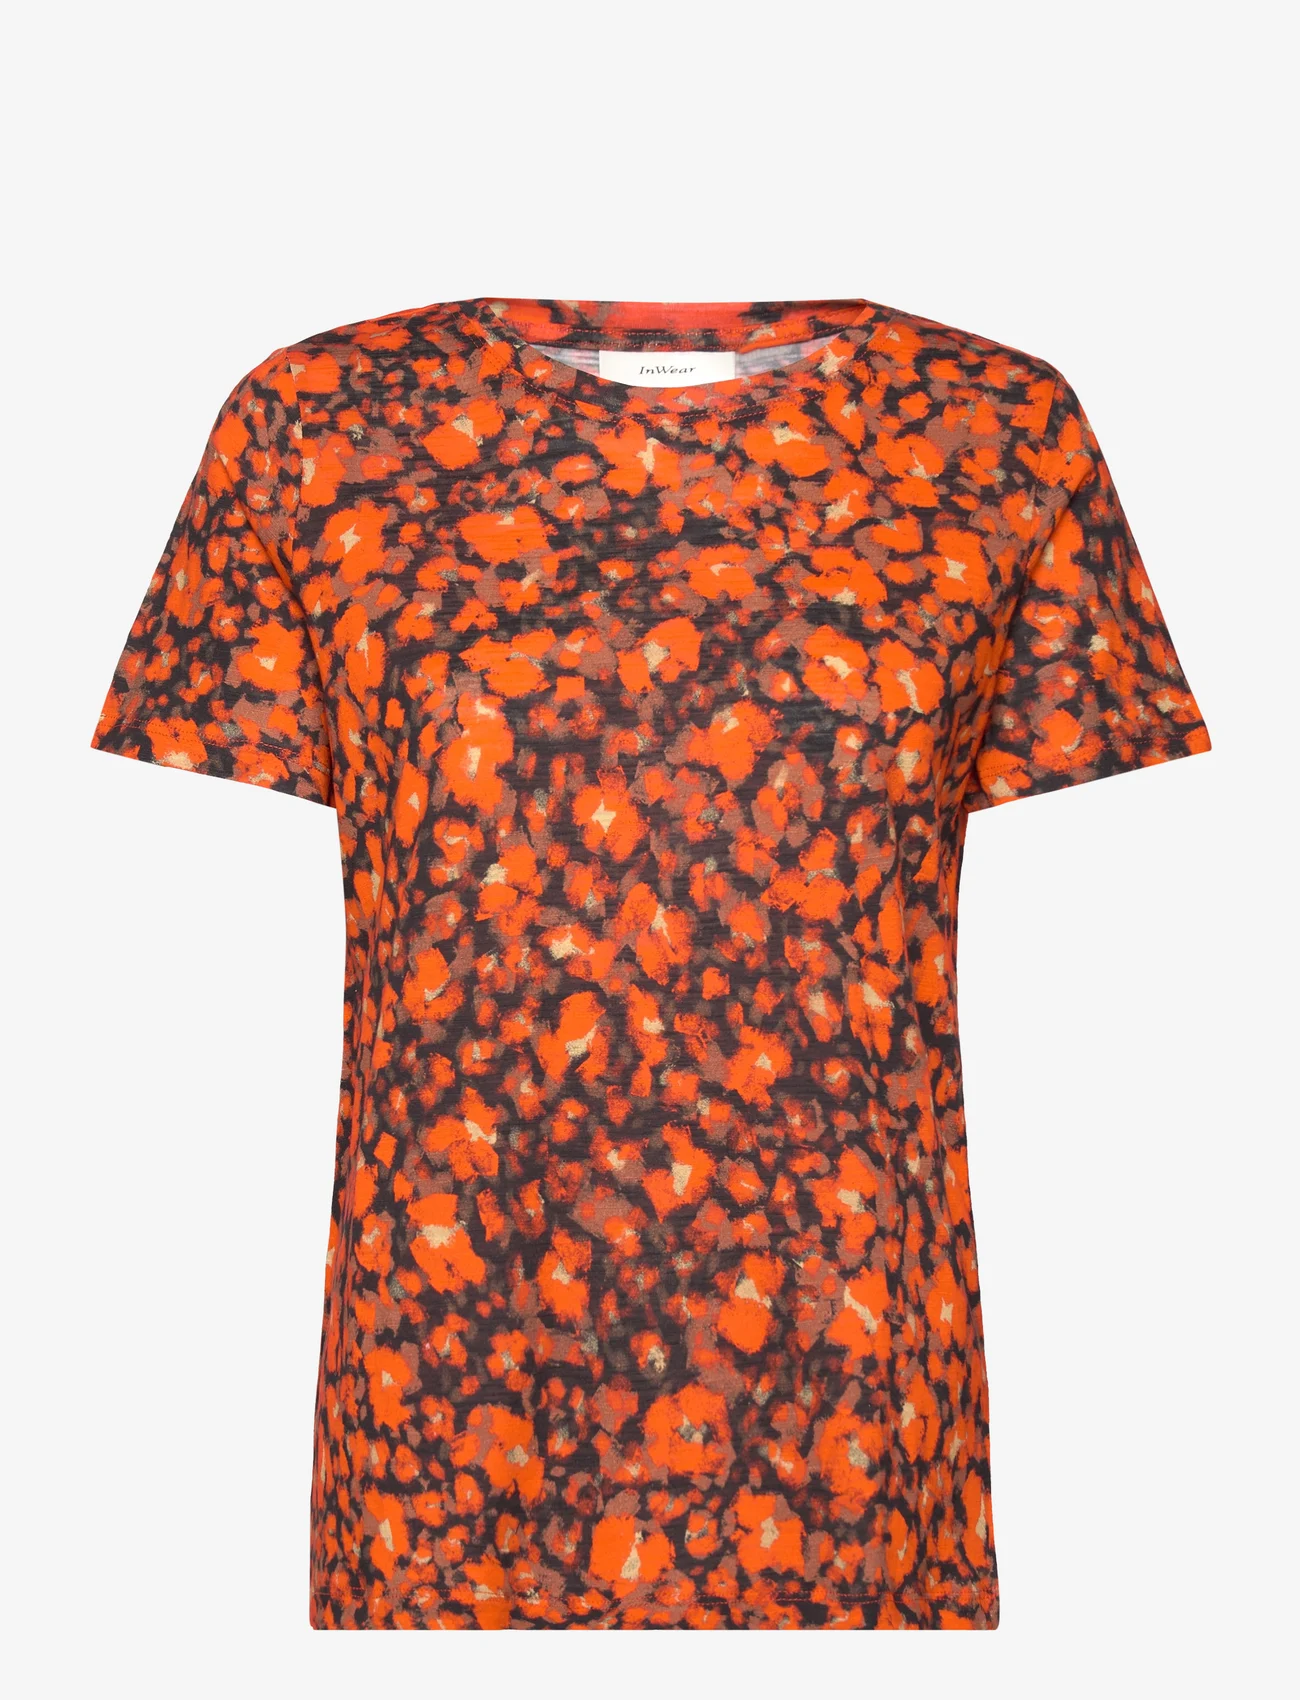 InWear - AlmaIW Print Tshirt - t-shirts - cherry tomato painted flower - 1